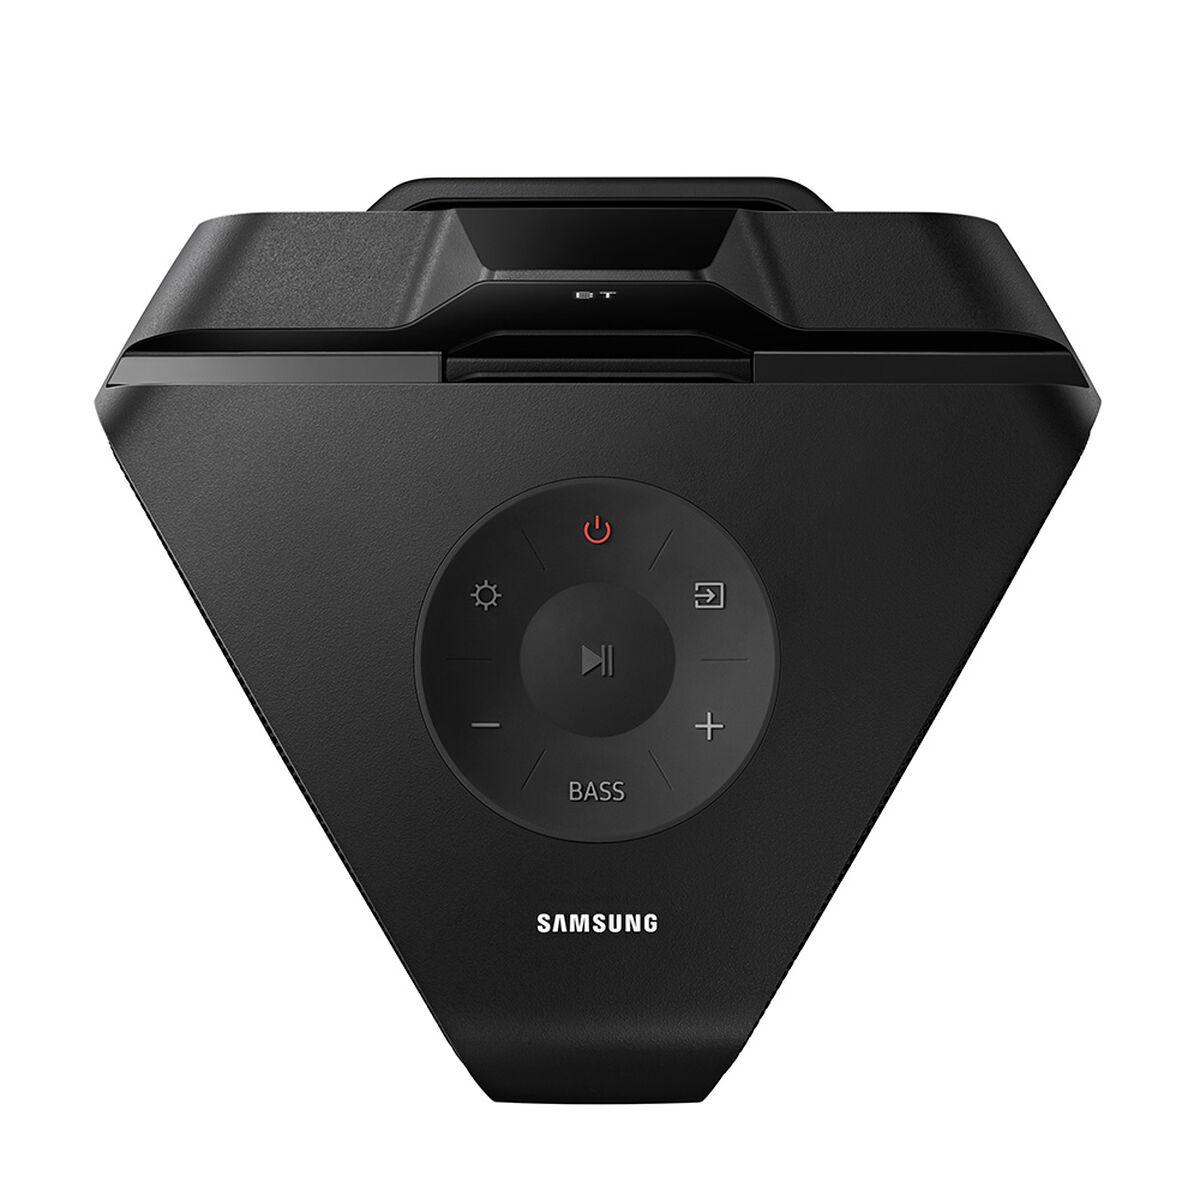 Minicomponente Sound Tower Samsung MX-T70/ZS